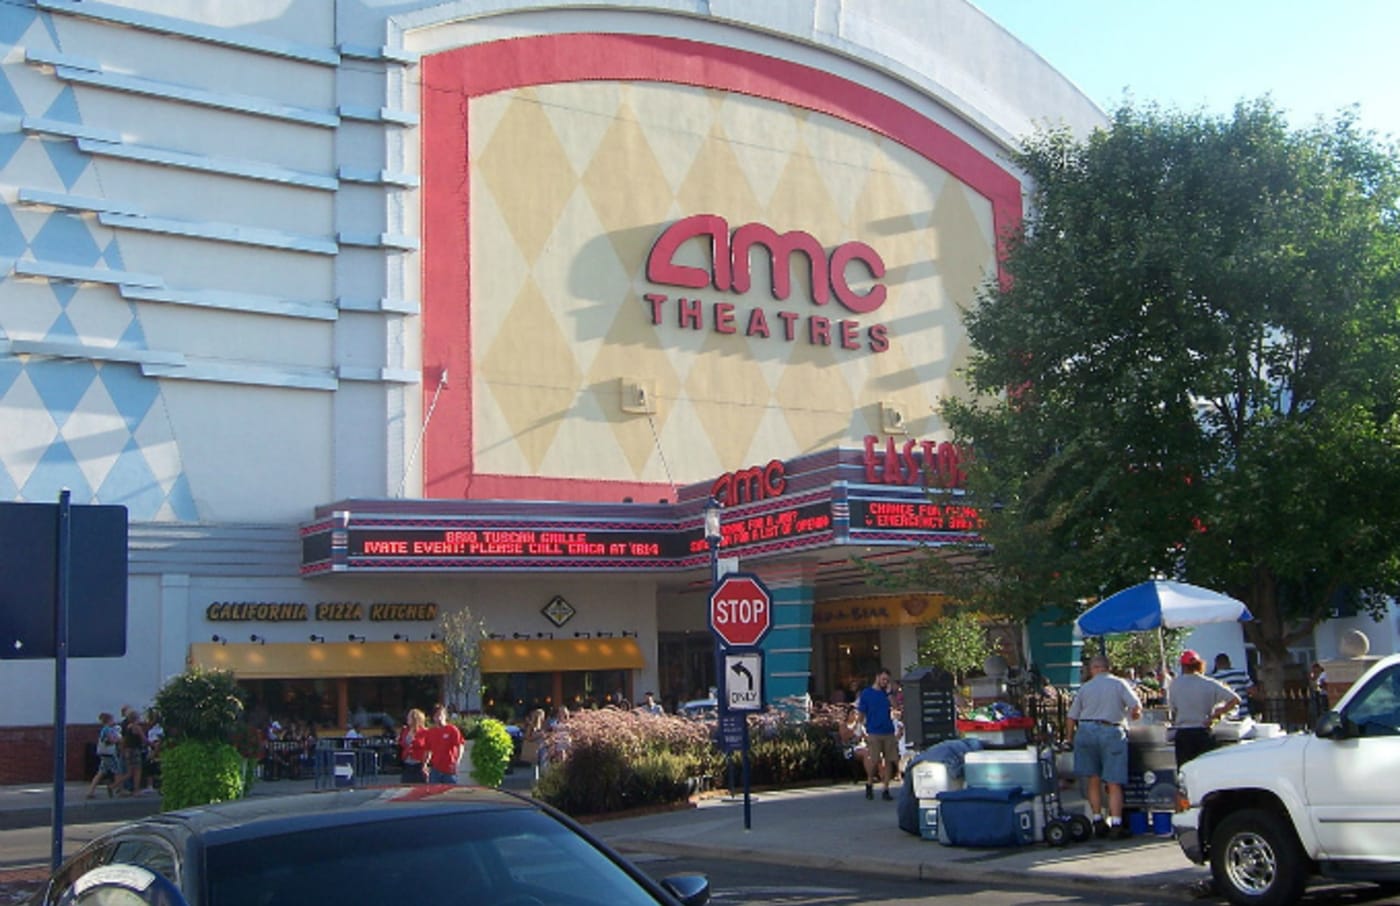 universal amc theatre